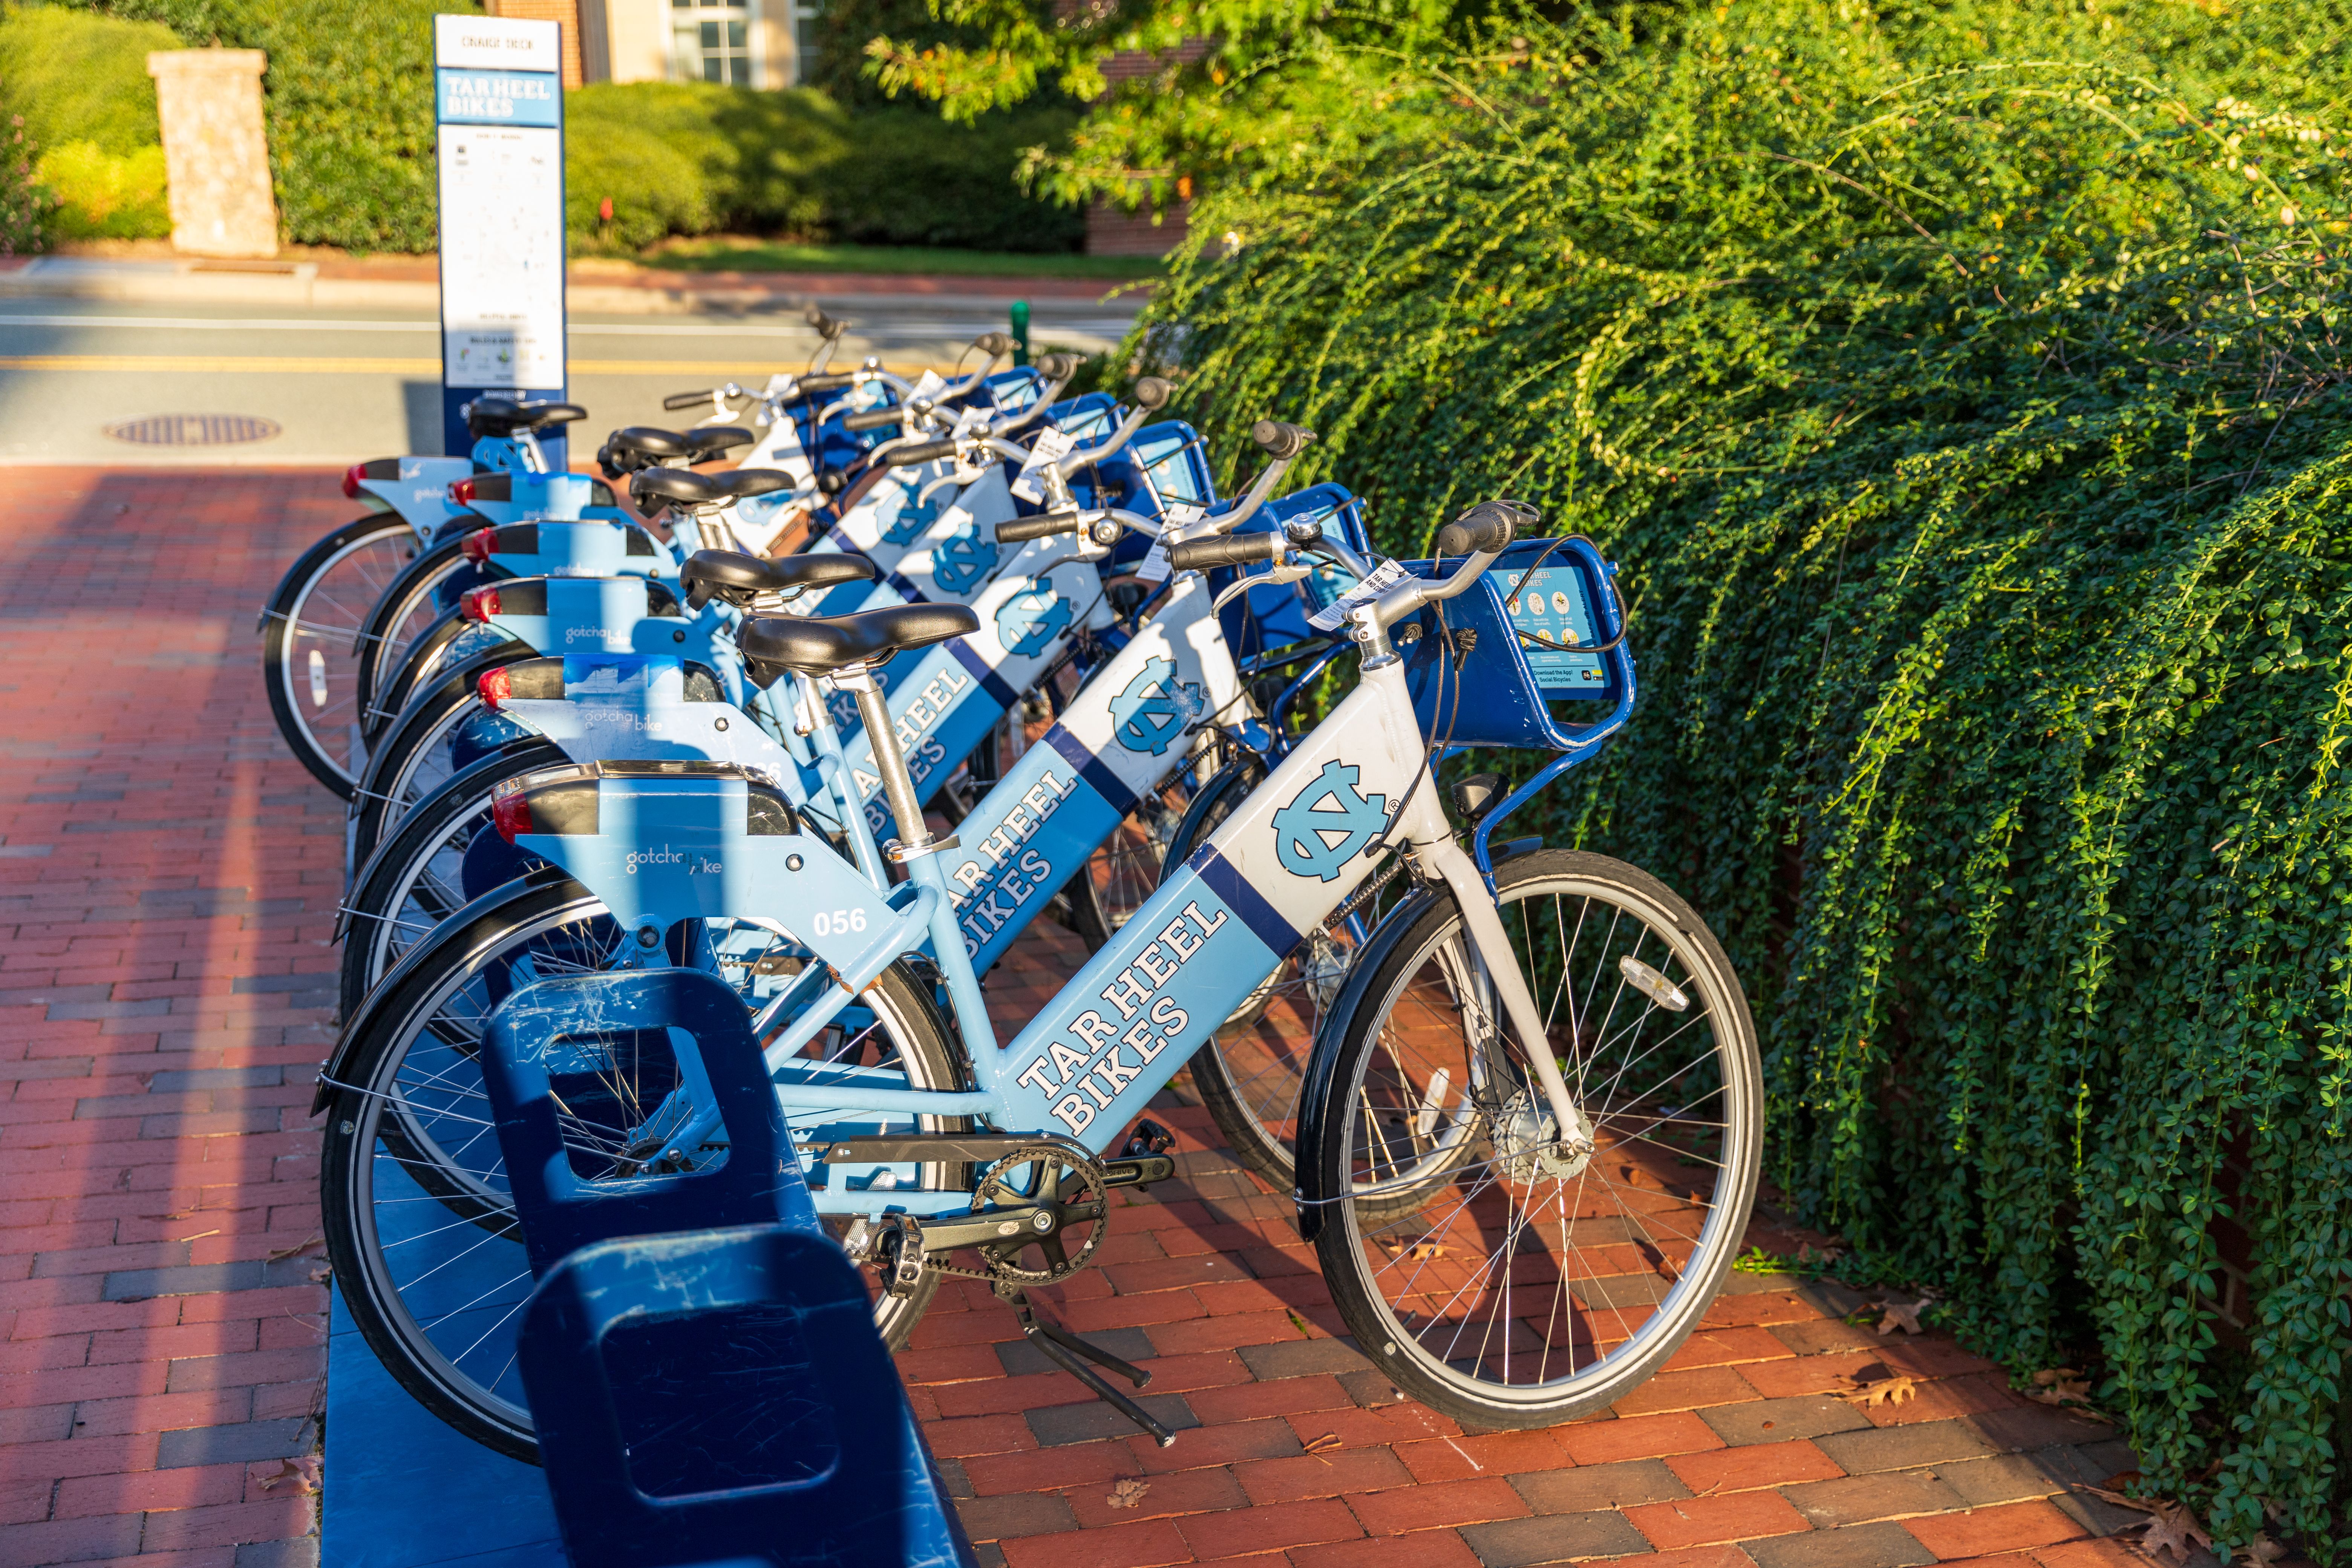 Line of bikes at University of North Carolina